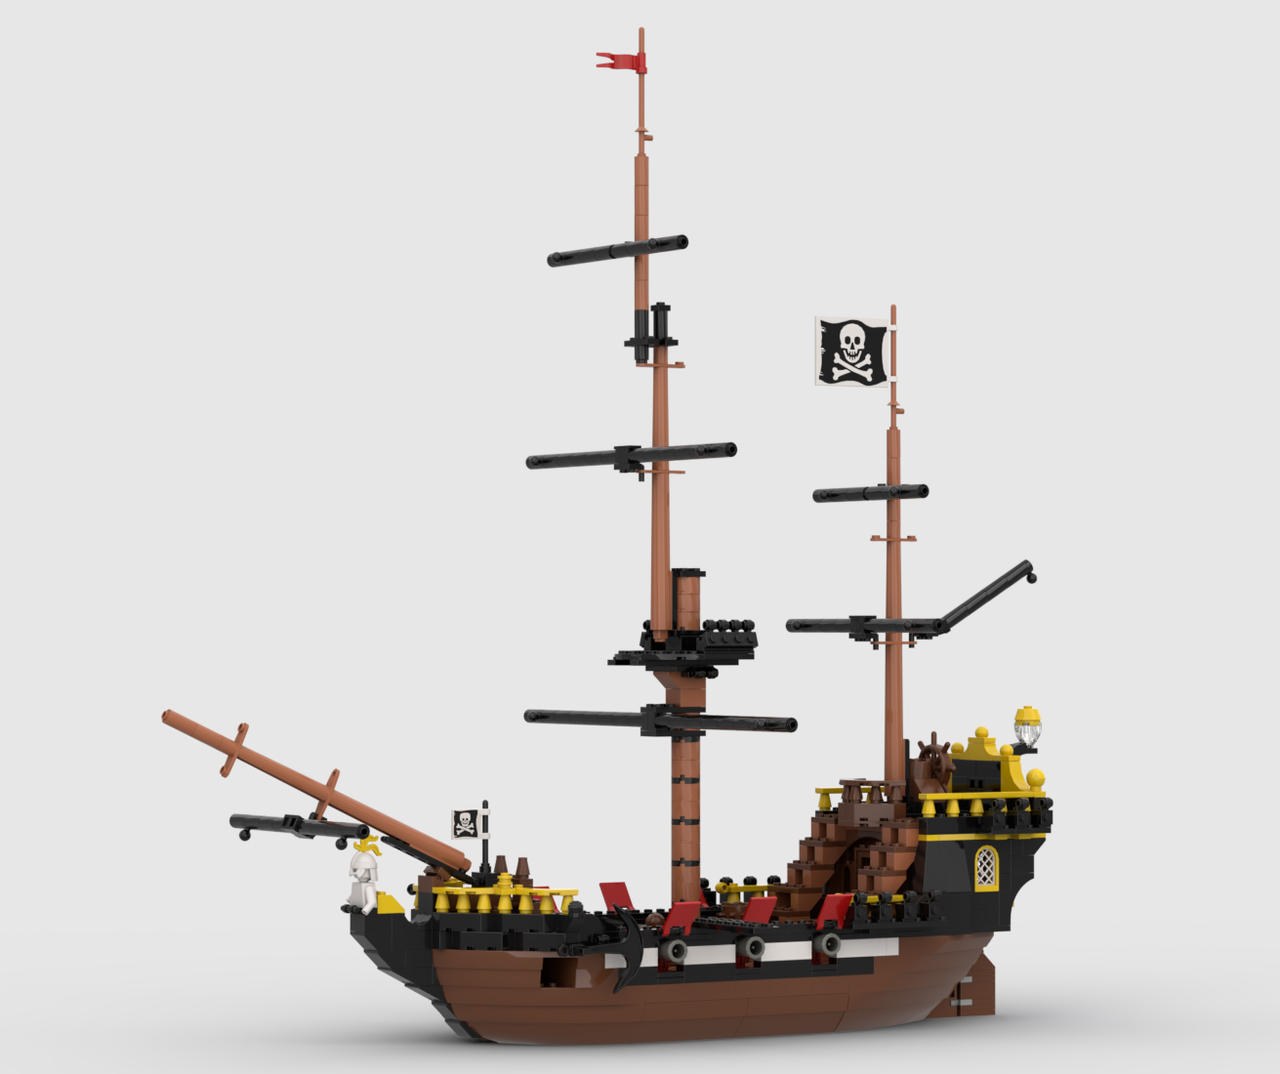 LEGO pirate ship Hispaniola by dazinbane on DeviantArt